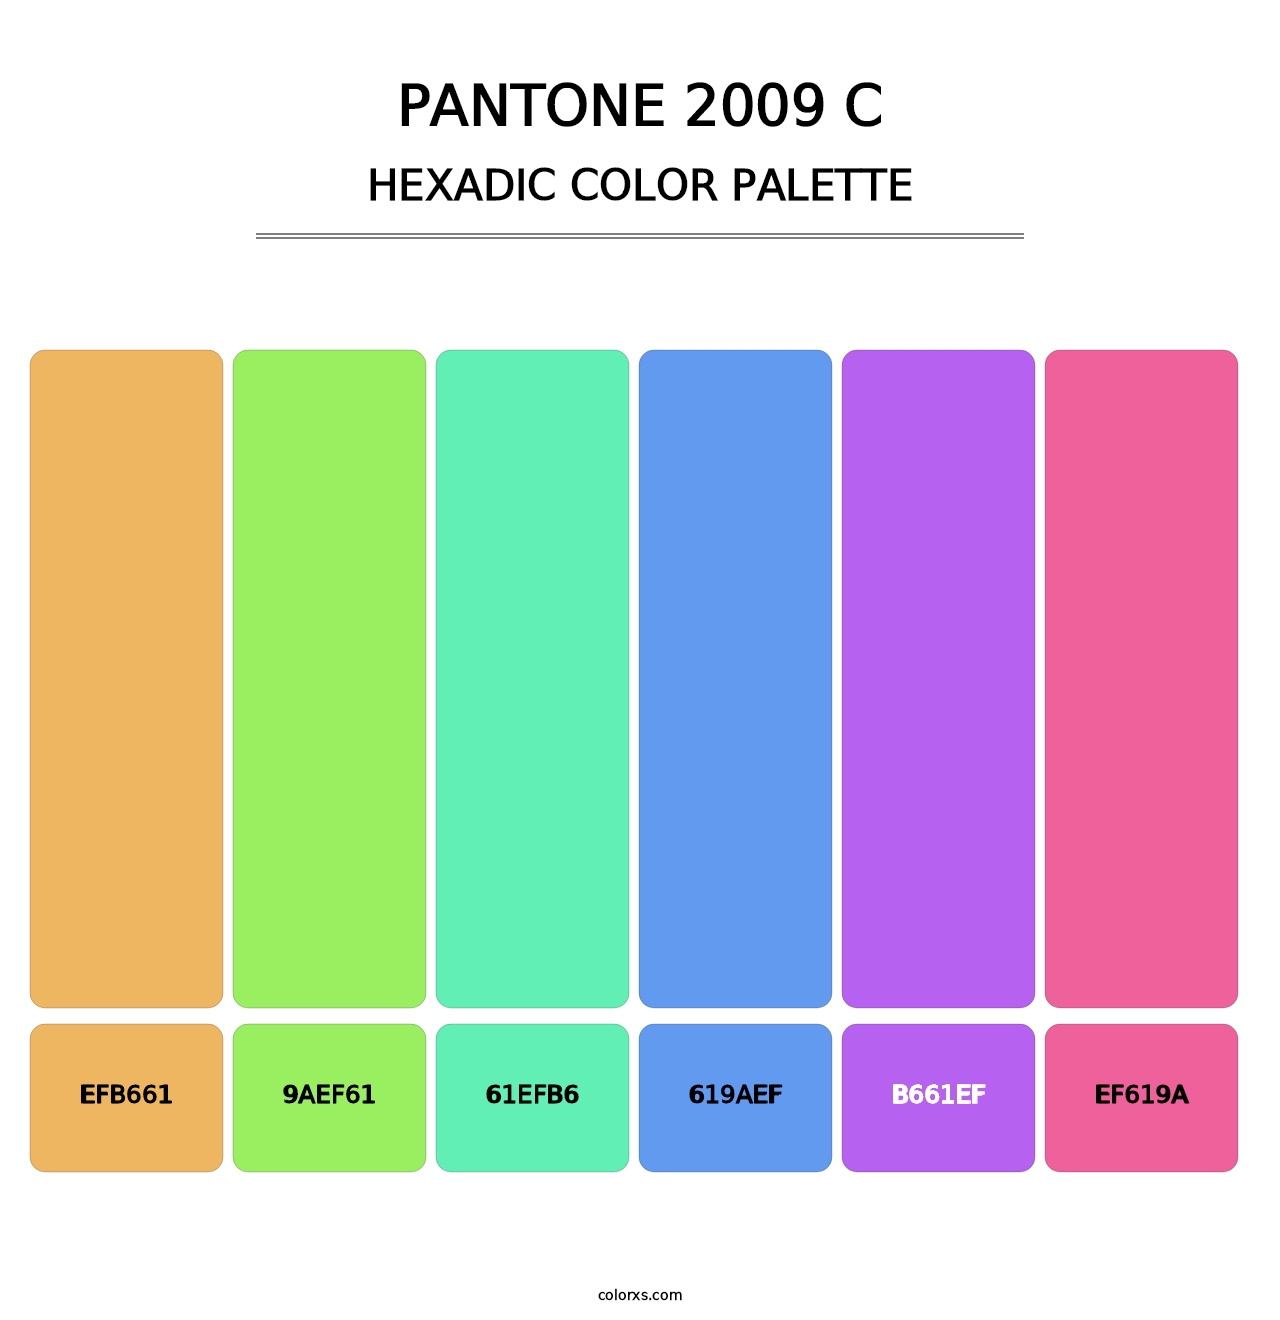 PANTONE 2009 C - Hexadic Color Palette